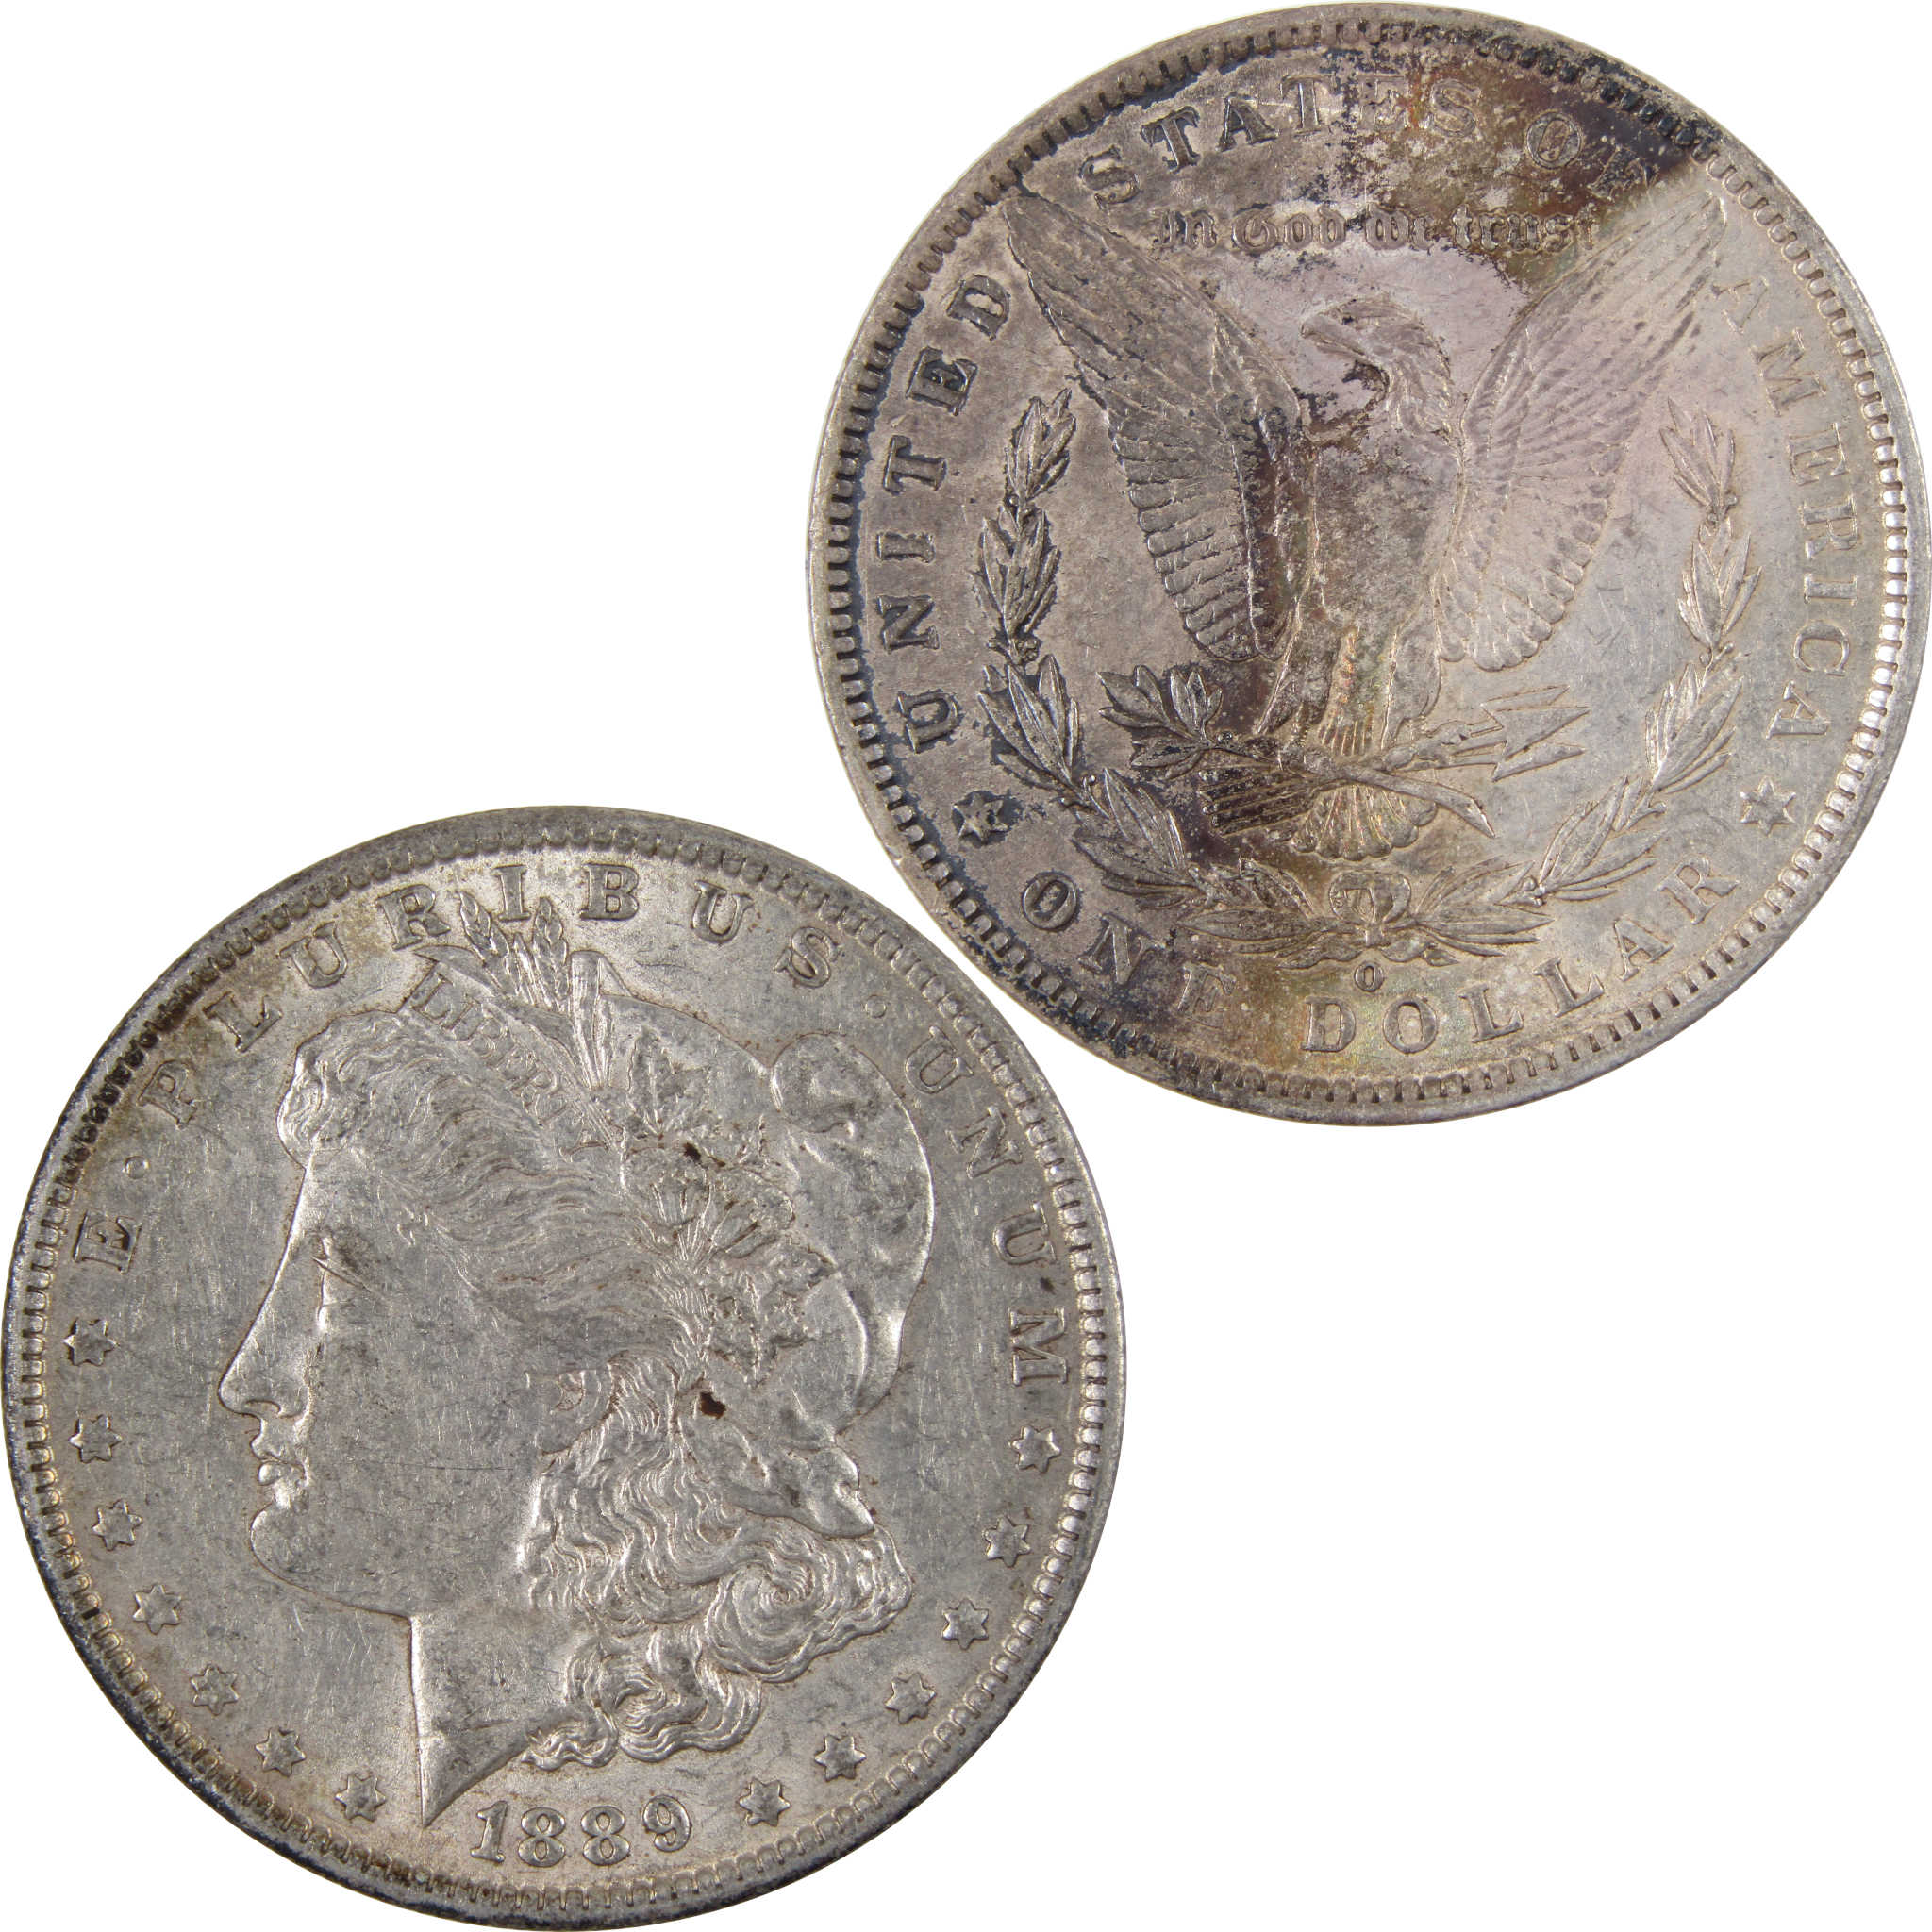 1889 O Morgan Dollar XF/AU Extremely Fine/About Uncirculated SKU:I2806 - Morgan coin - Morgan silver dollar - Morgan silver dollar for sale - Profile Coins &amp; Collectibles